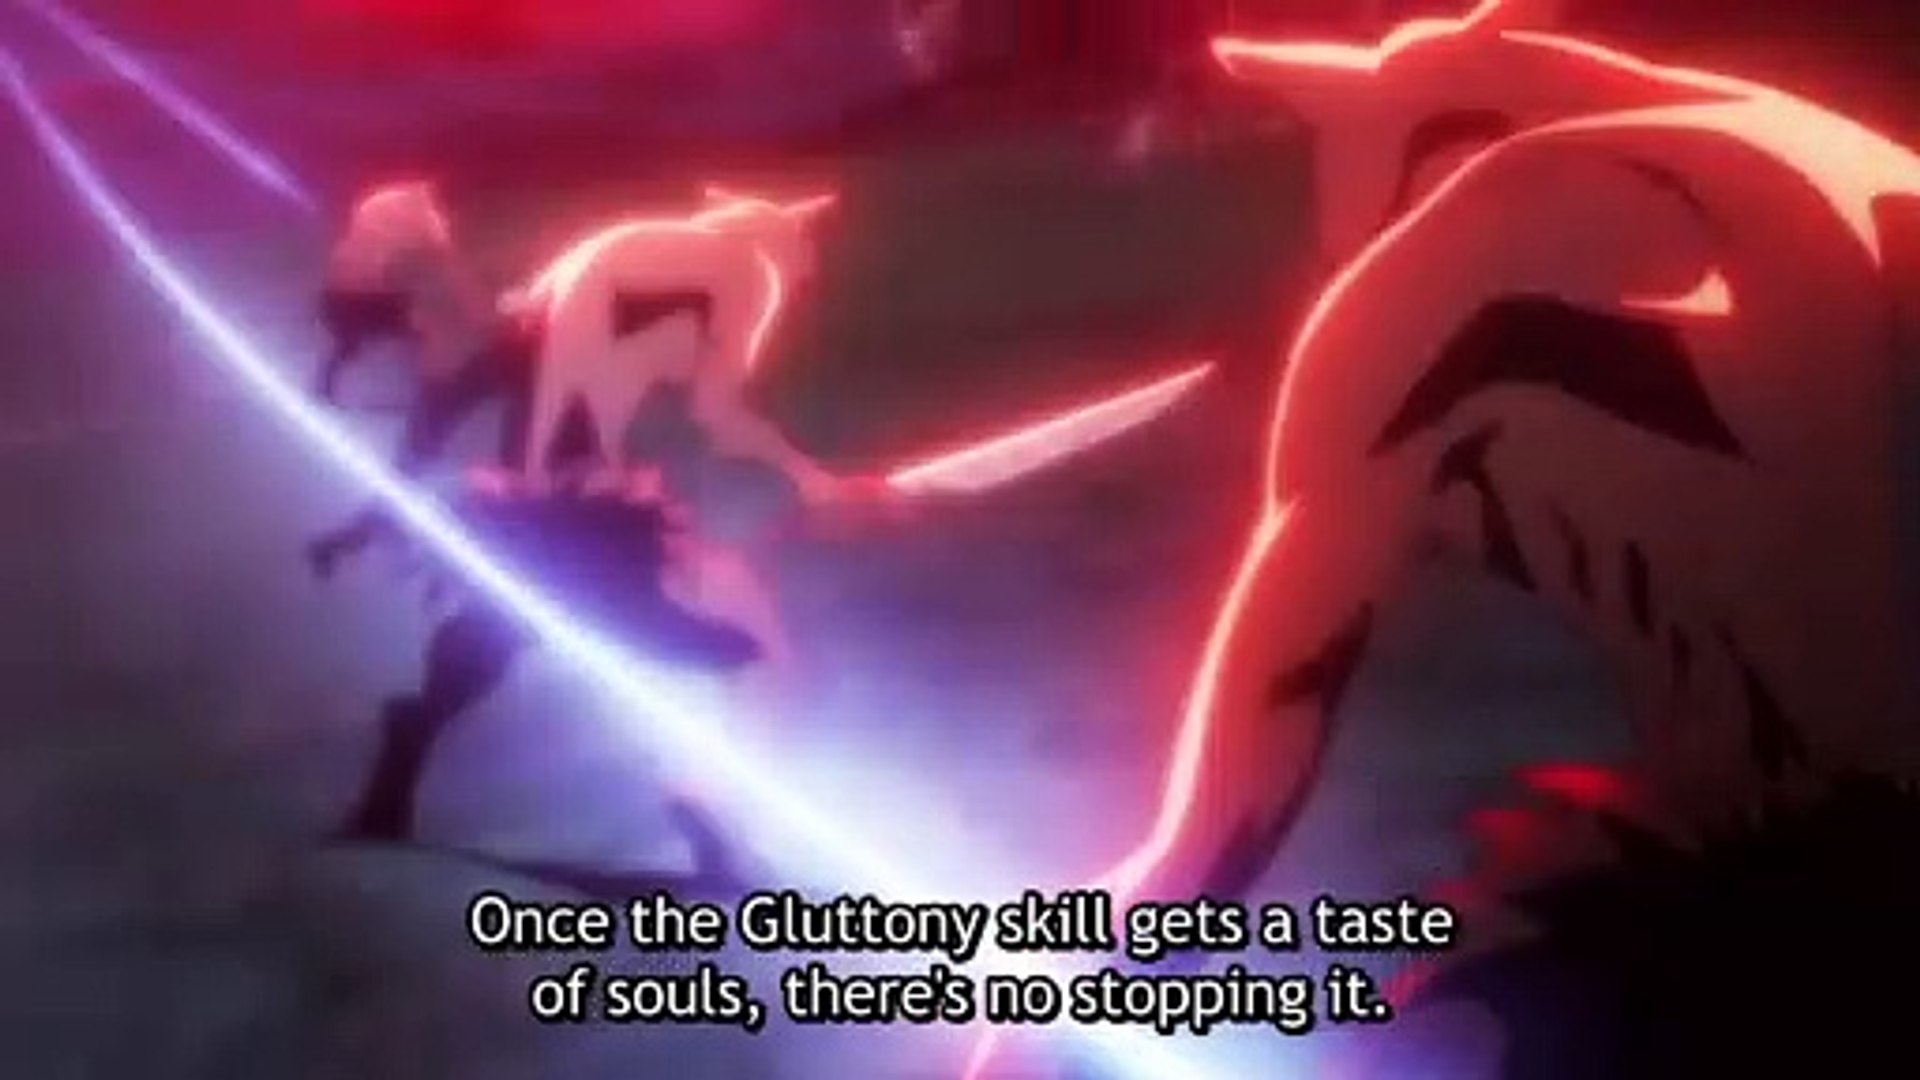 Berserk of Gluttony Ep 7 / BOUSHOKU NO BERSERK Ep 7 / Anime Lord